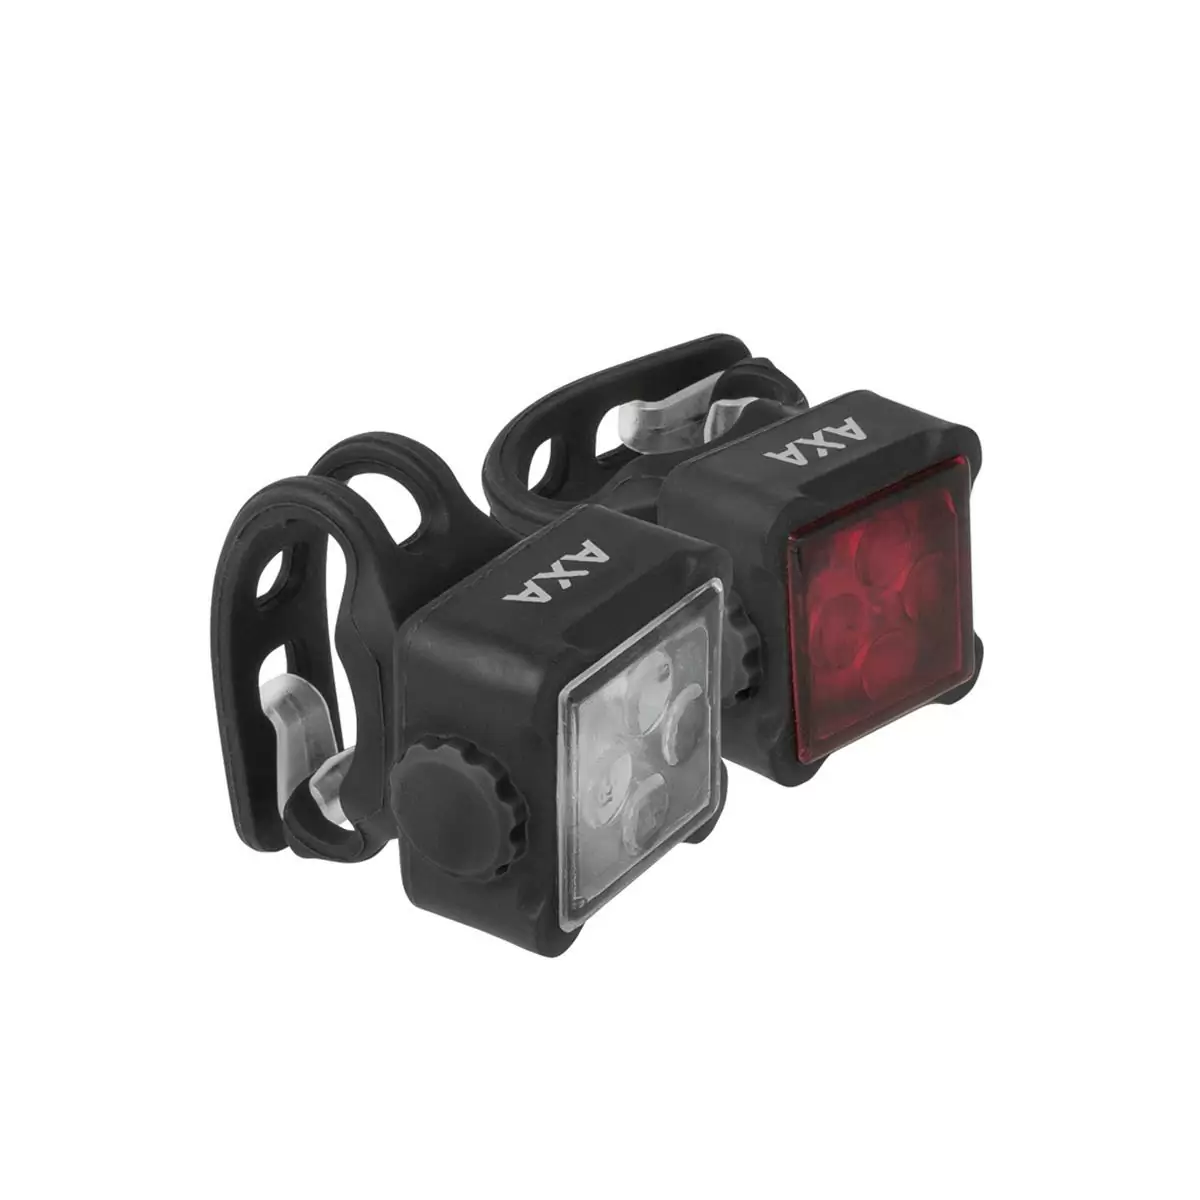 Kit Niteline 44-R front and rear light USB - image